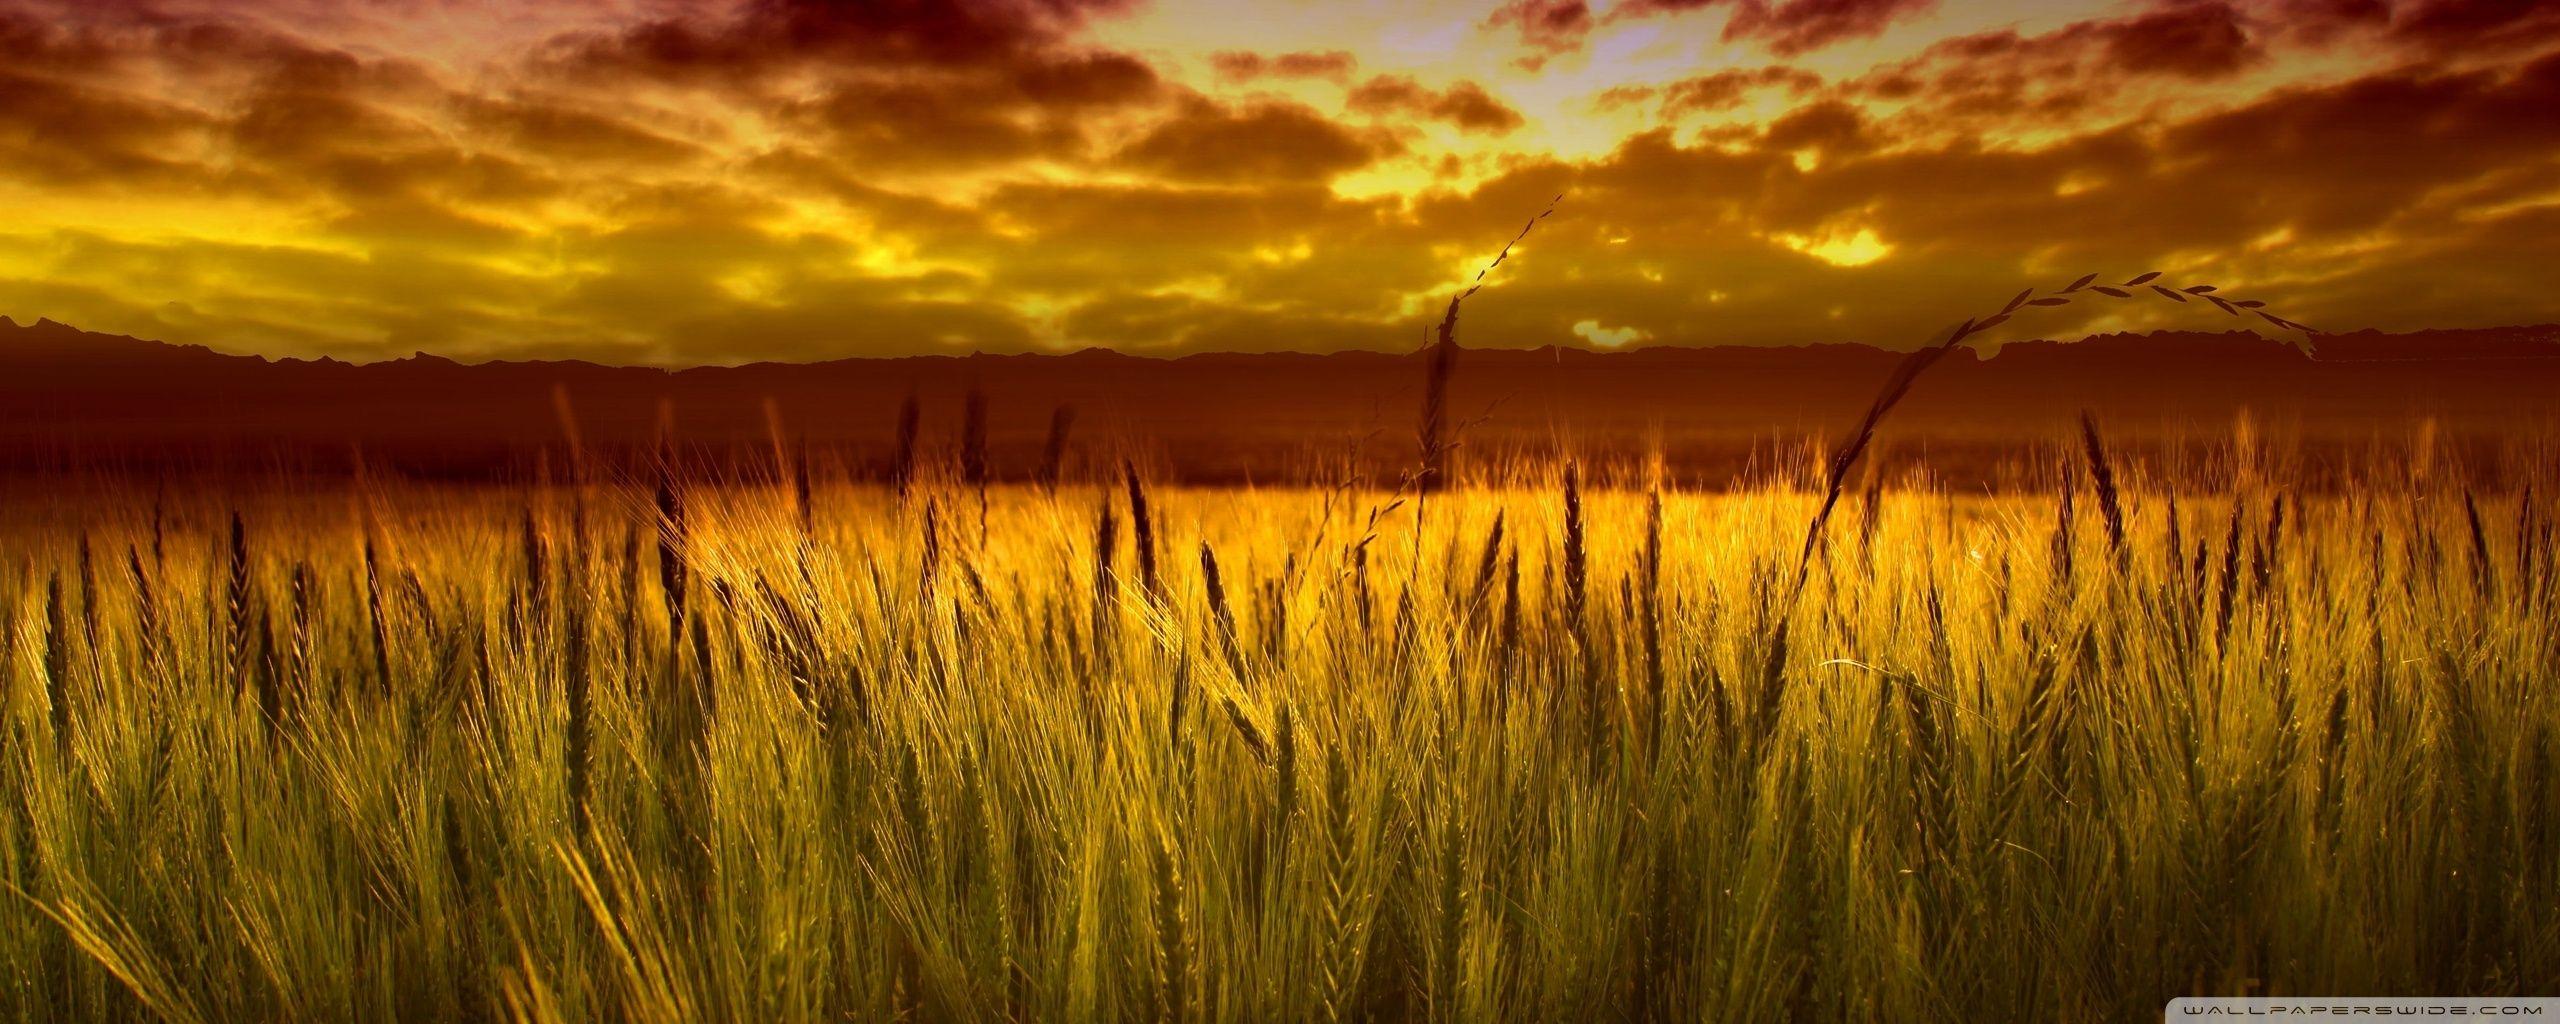 Colorful Sunset Over Wheat Field ❤ 4K HD Desktop Wallpaper for 4K